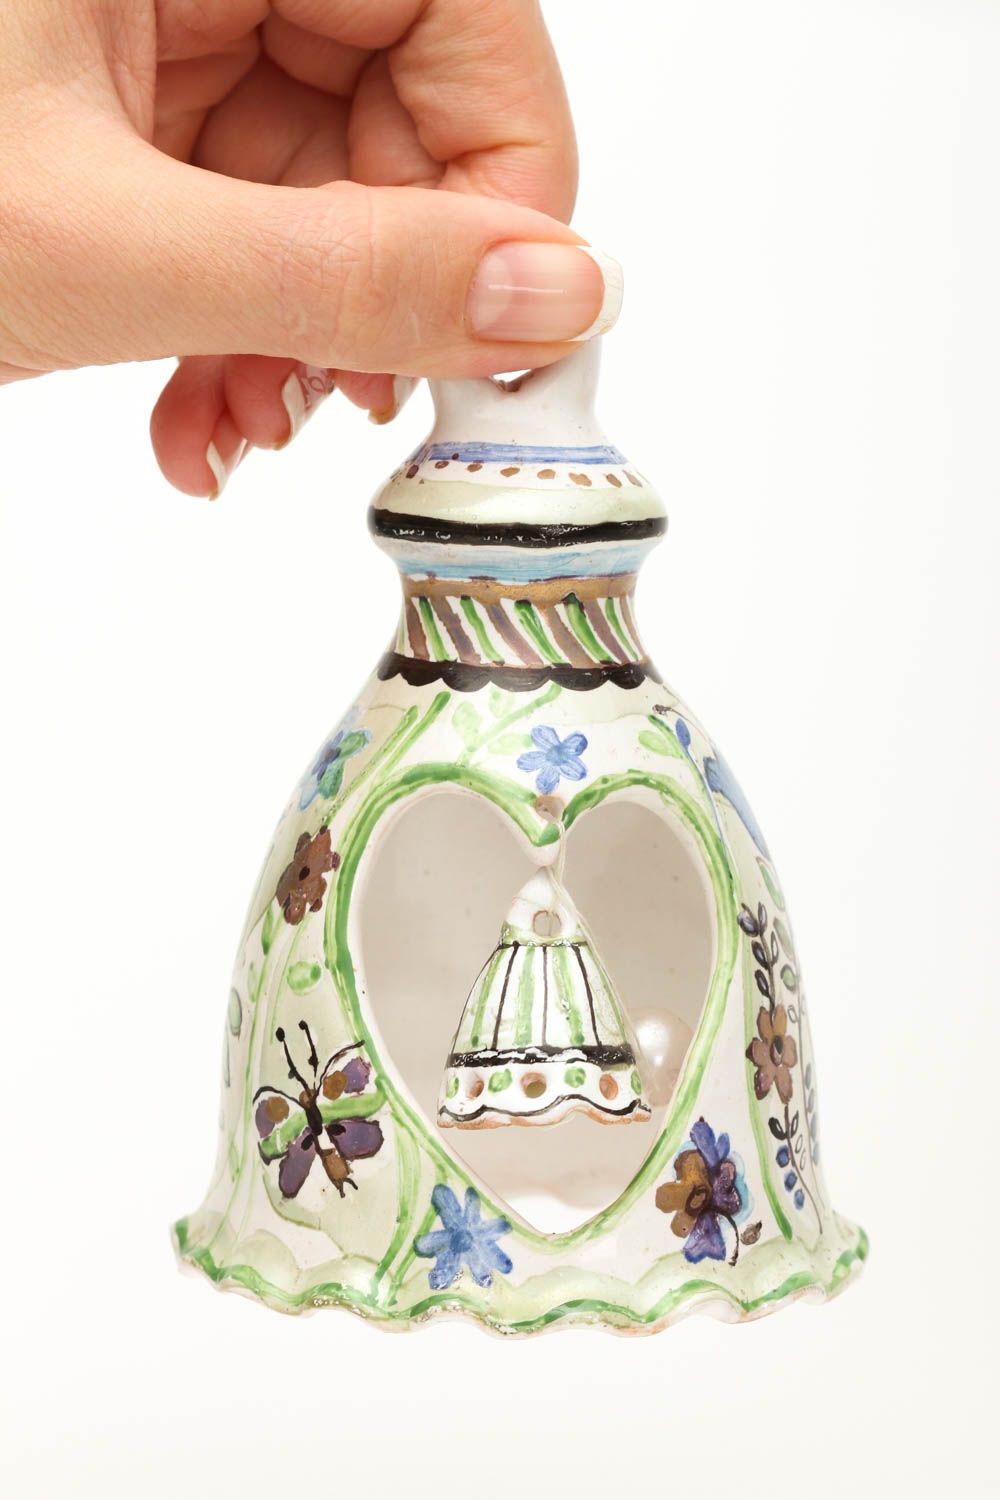 Souvenir handmade ceramic bell home design pottery works decorative use only photo 5